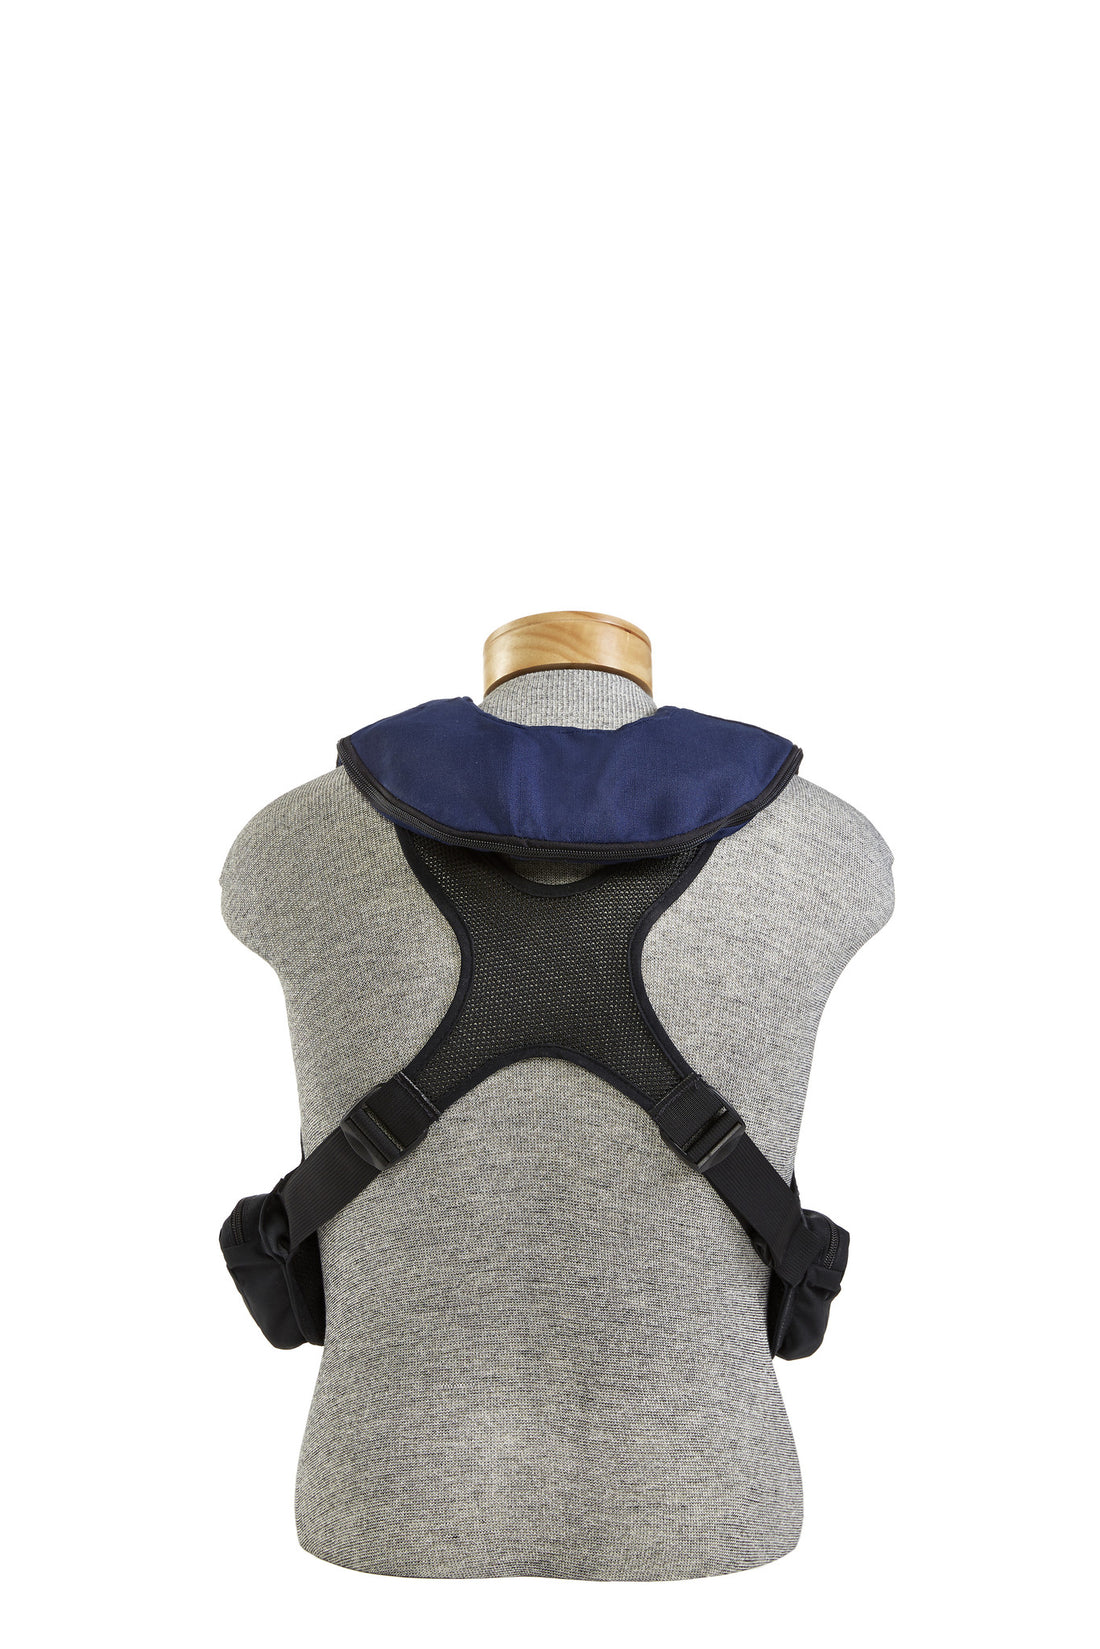 X-Back Basic - Constant-Wear Life Vest